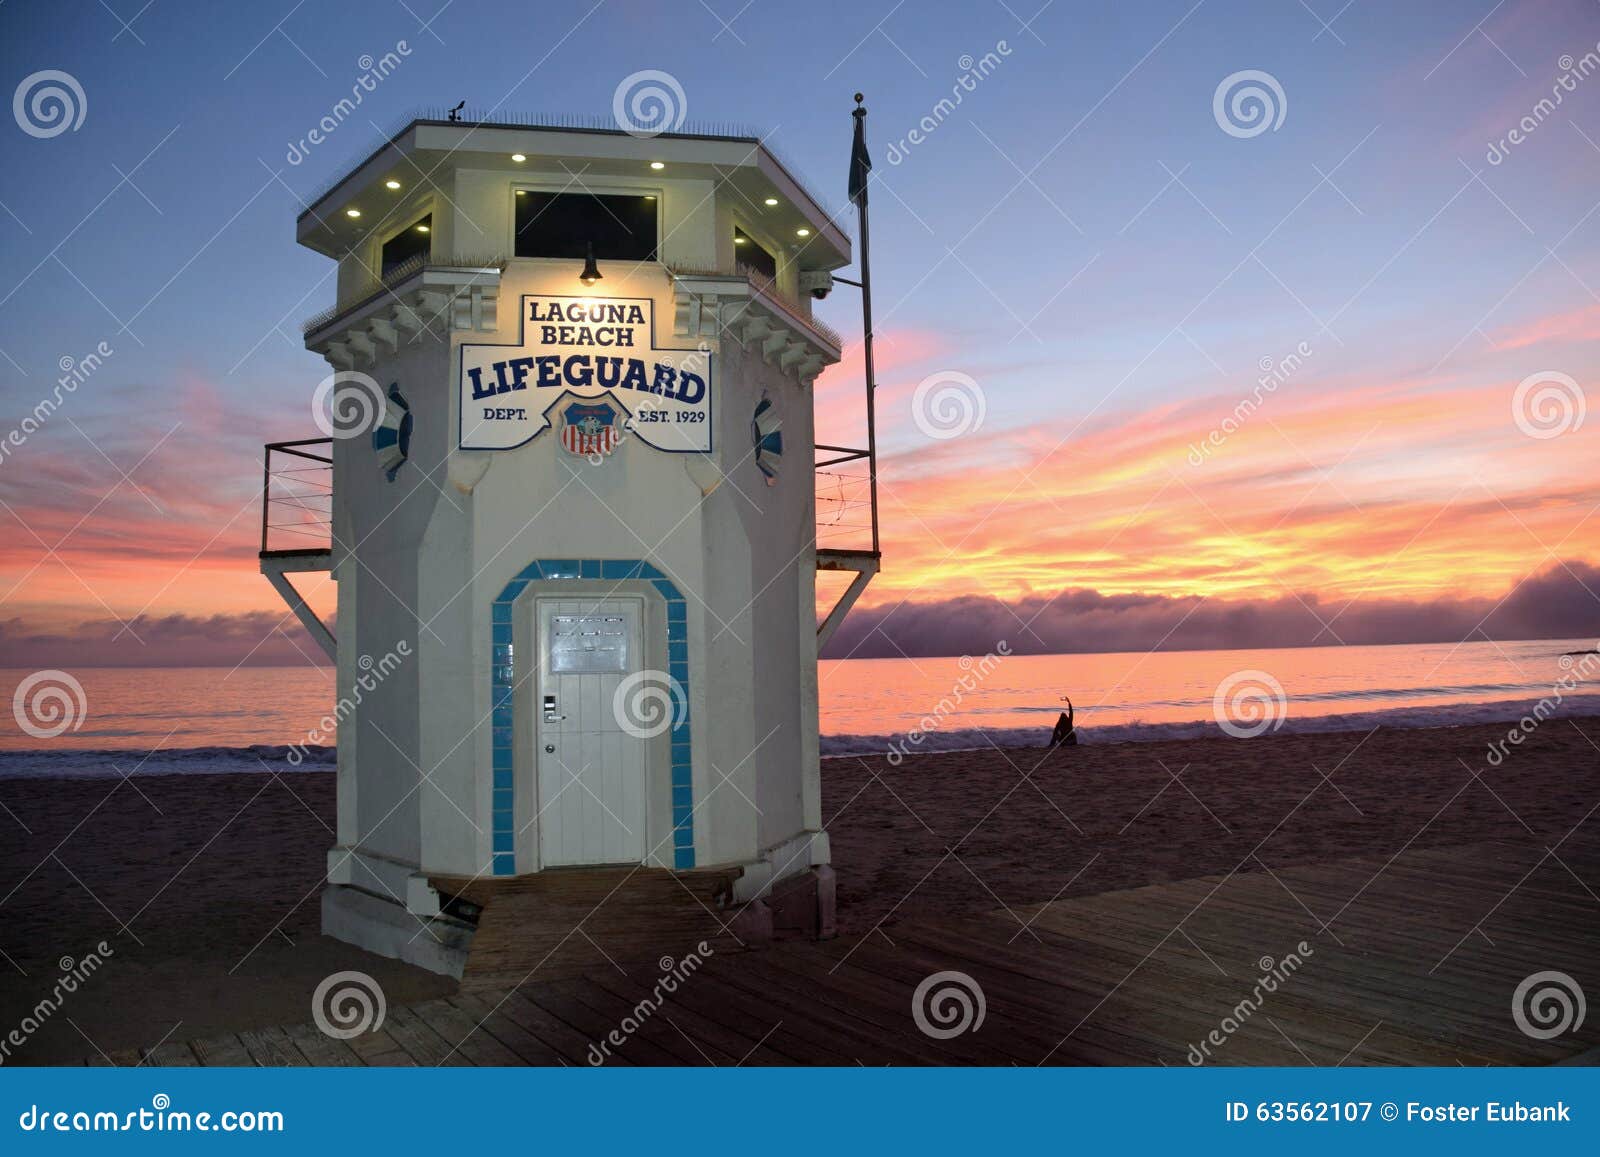 the iconic life guard tower on the main beach of laguna beach, california.